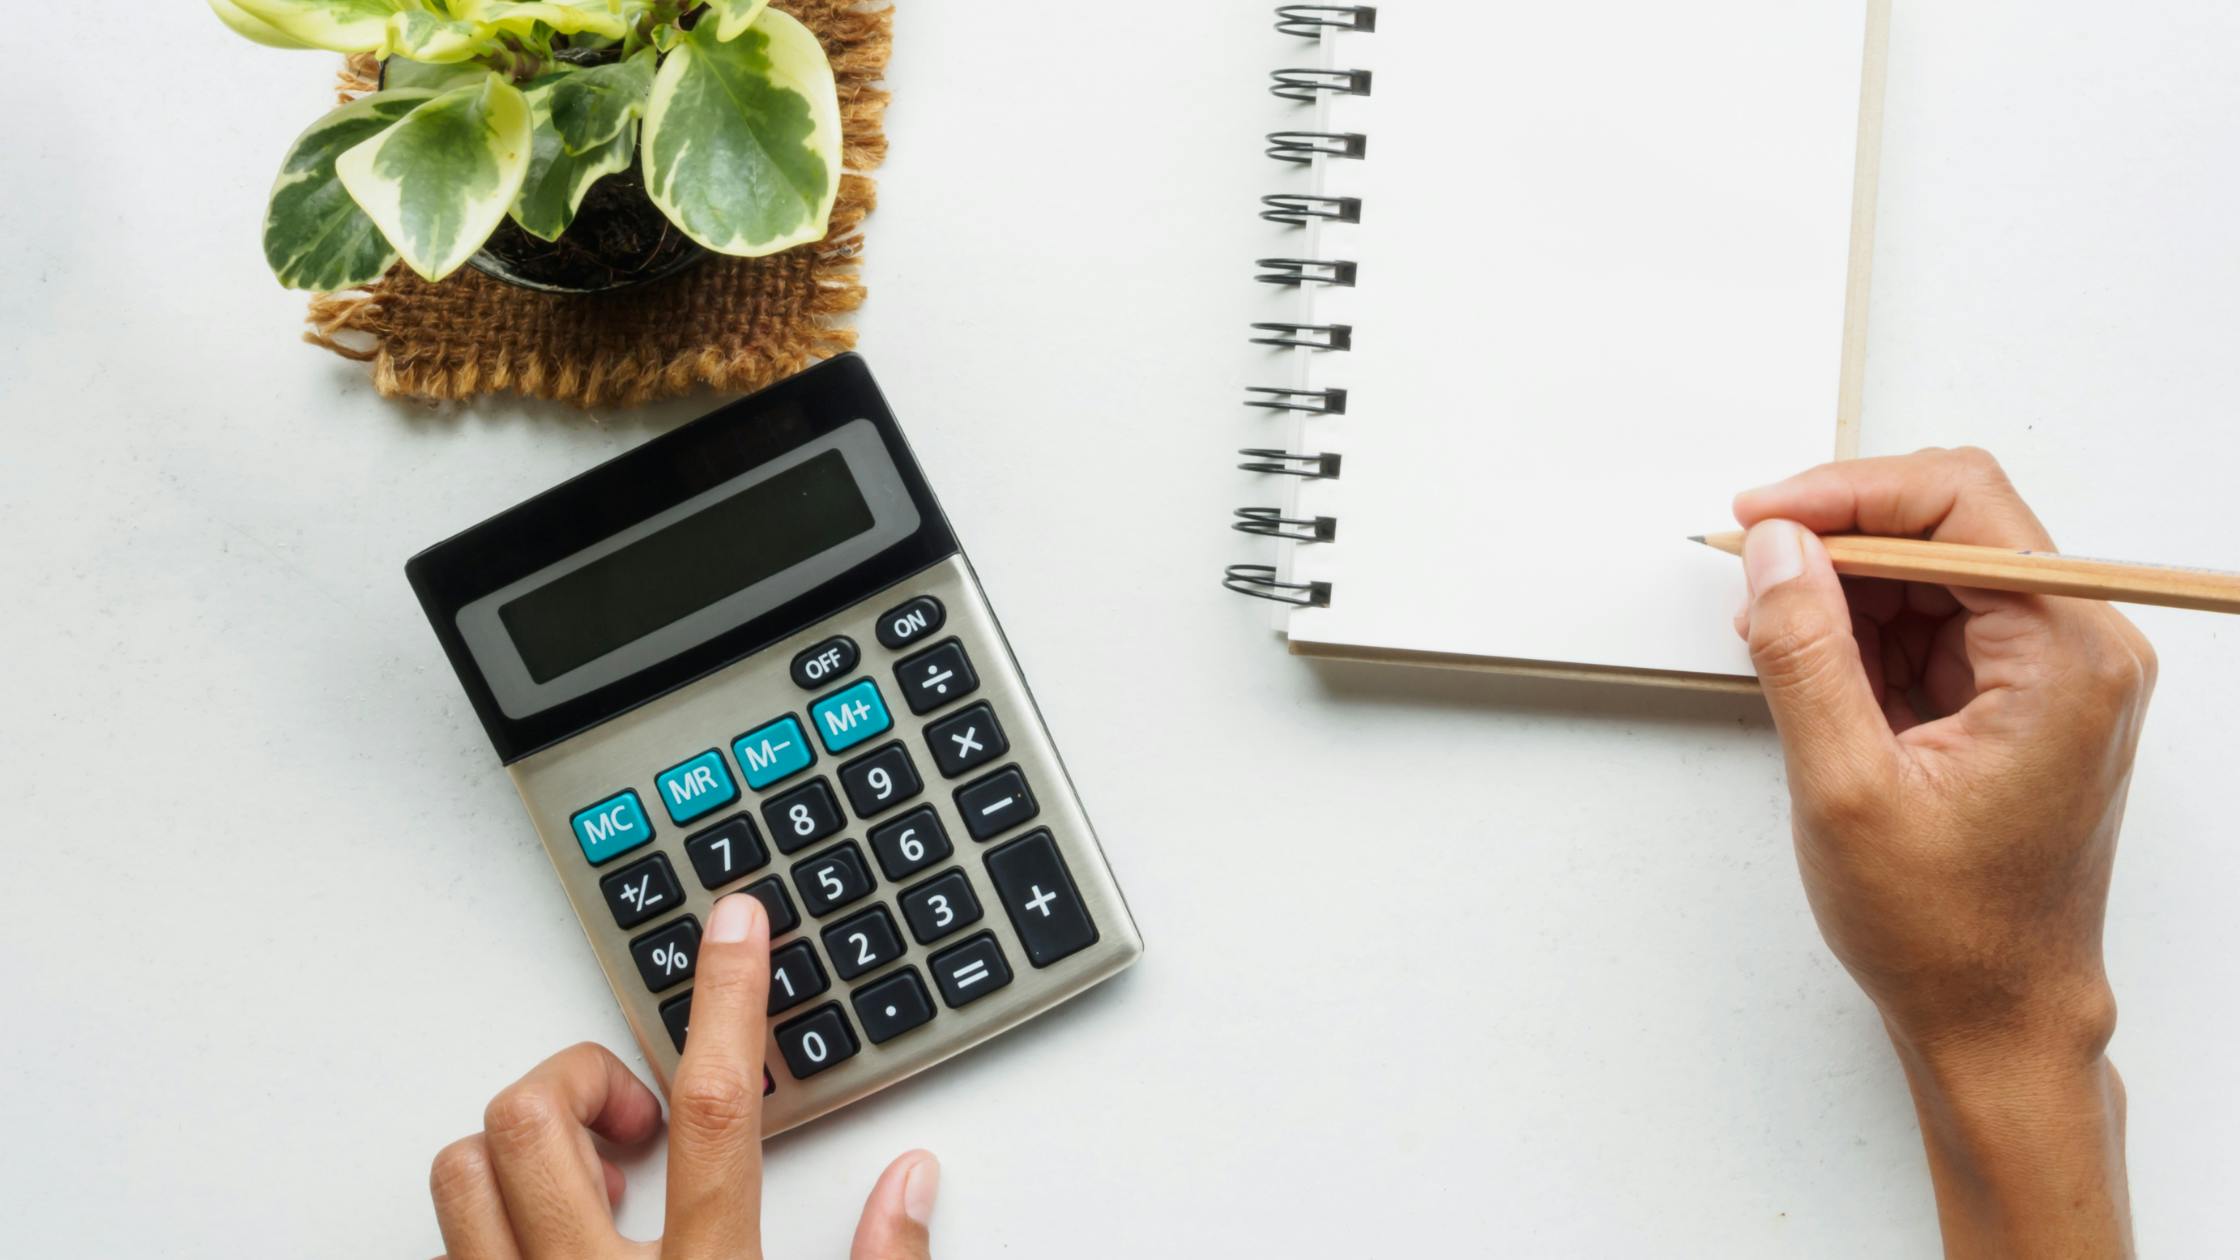 How accurate are mortgage calculators?